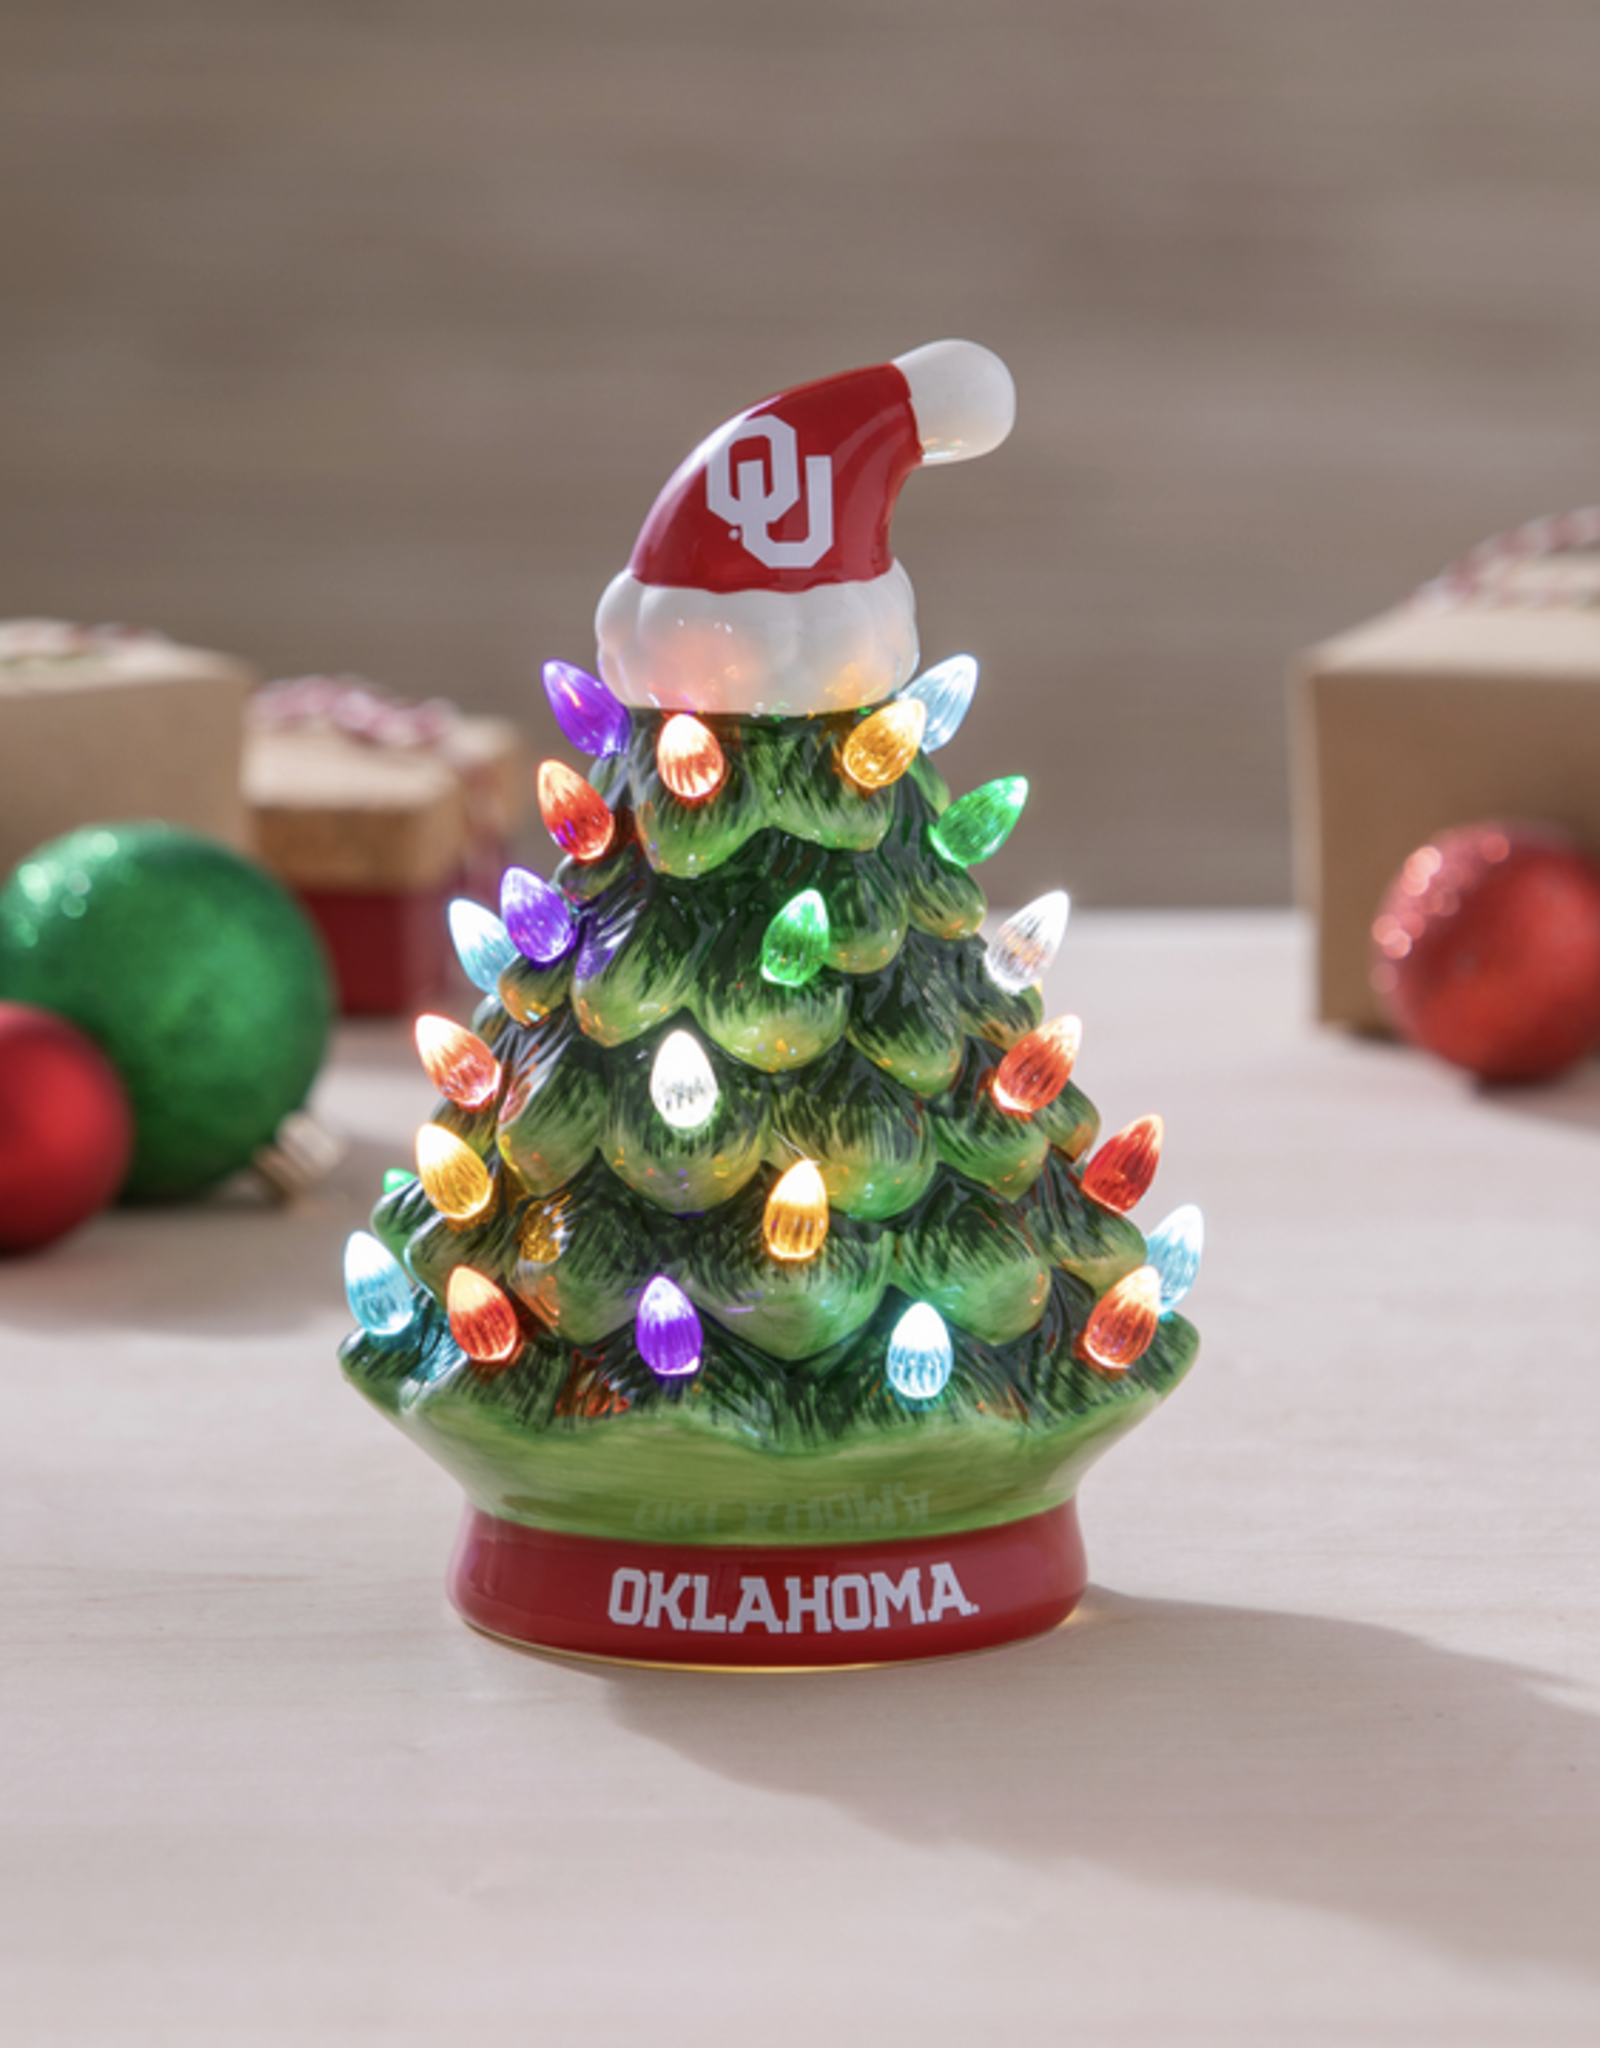 Evergreen OU 8" LED Lighted Ceramic Holiday Tree